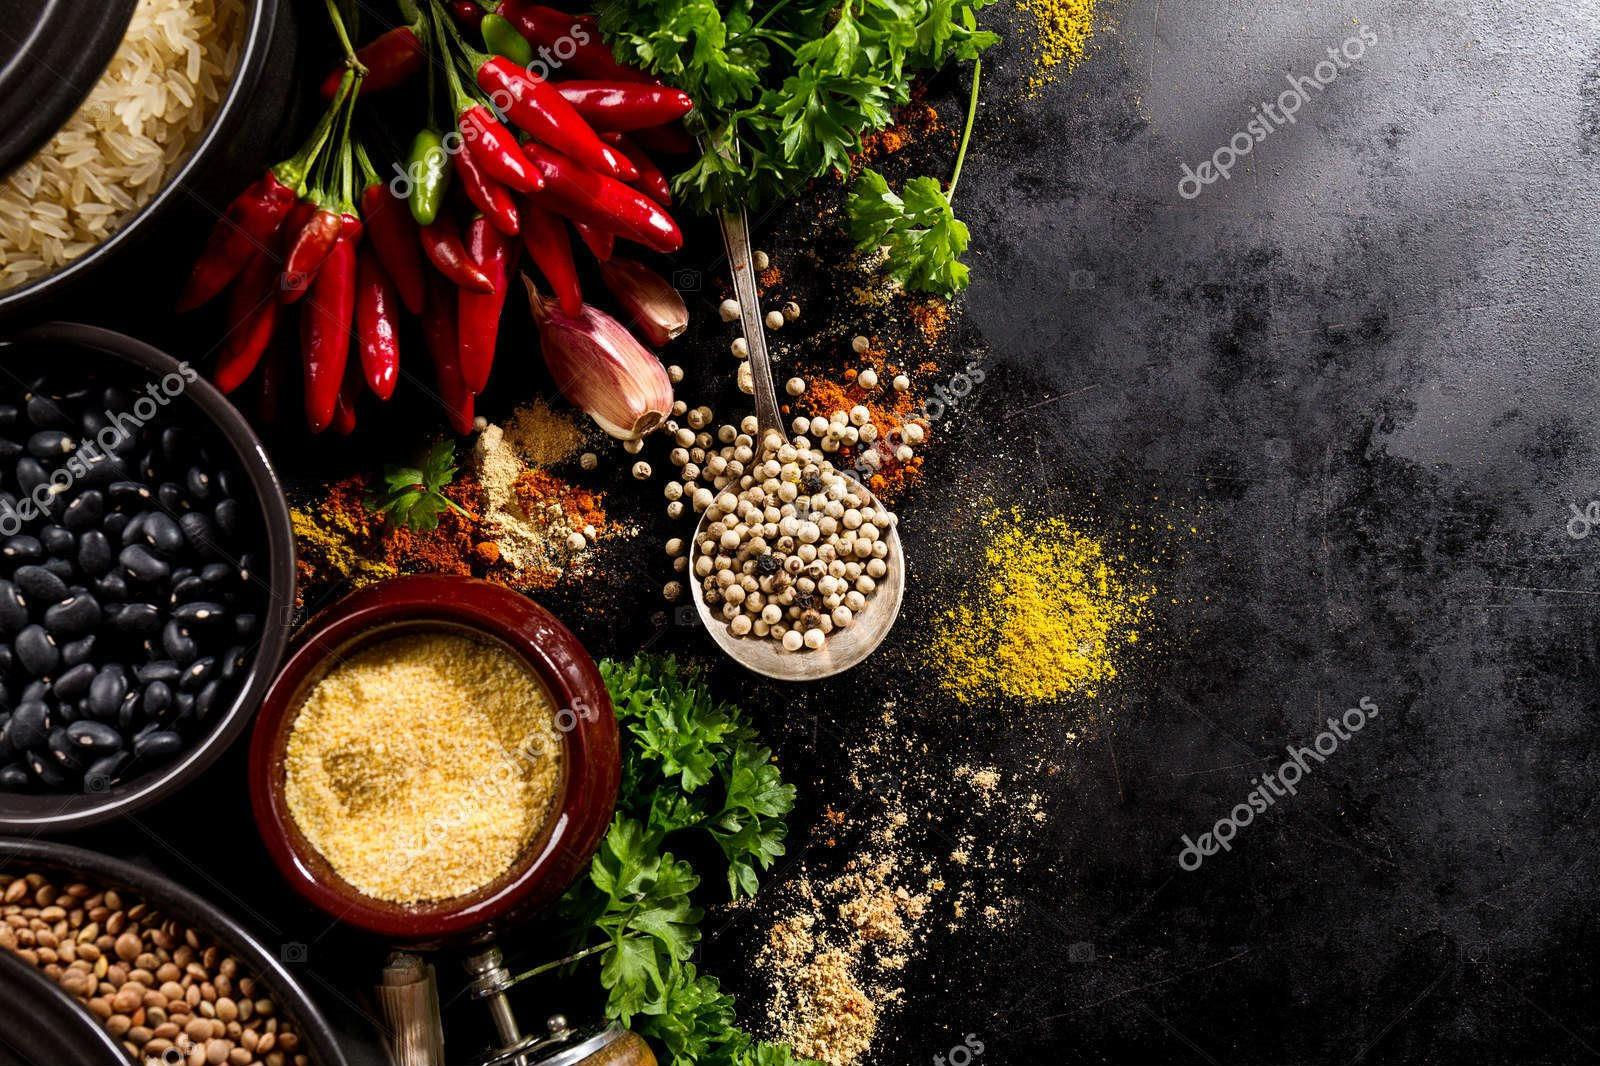 depositphotos_163690566-stock-photo-beautiful-tasty-appetizing-ingredients-spices(1).jpg